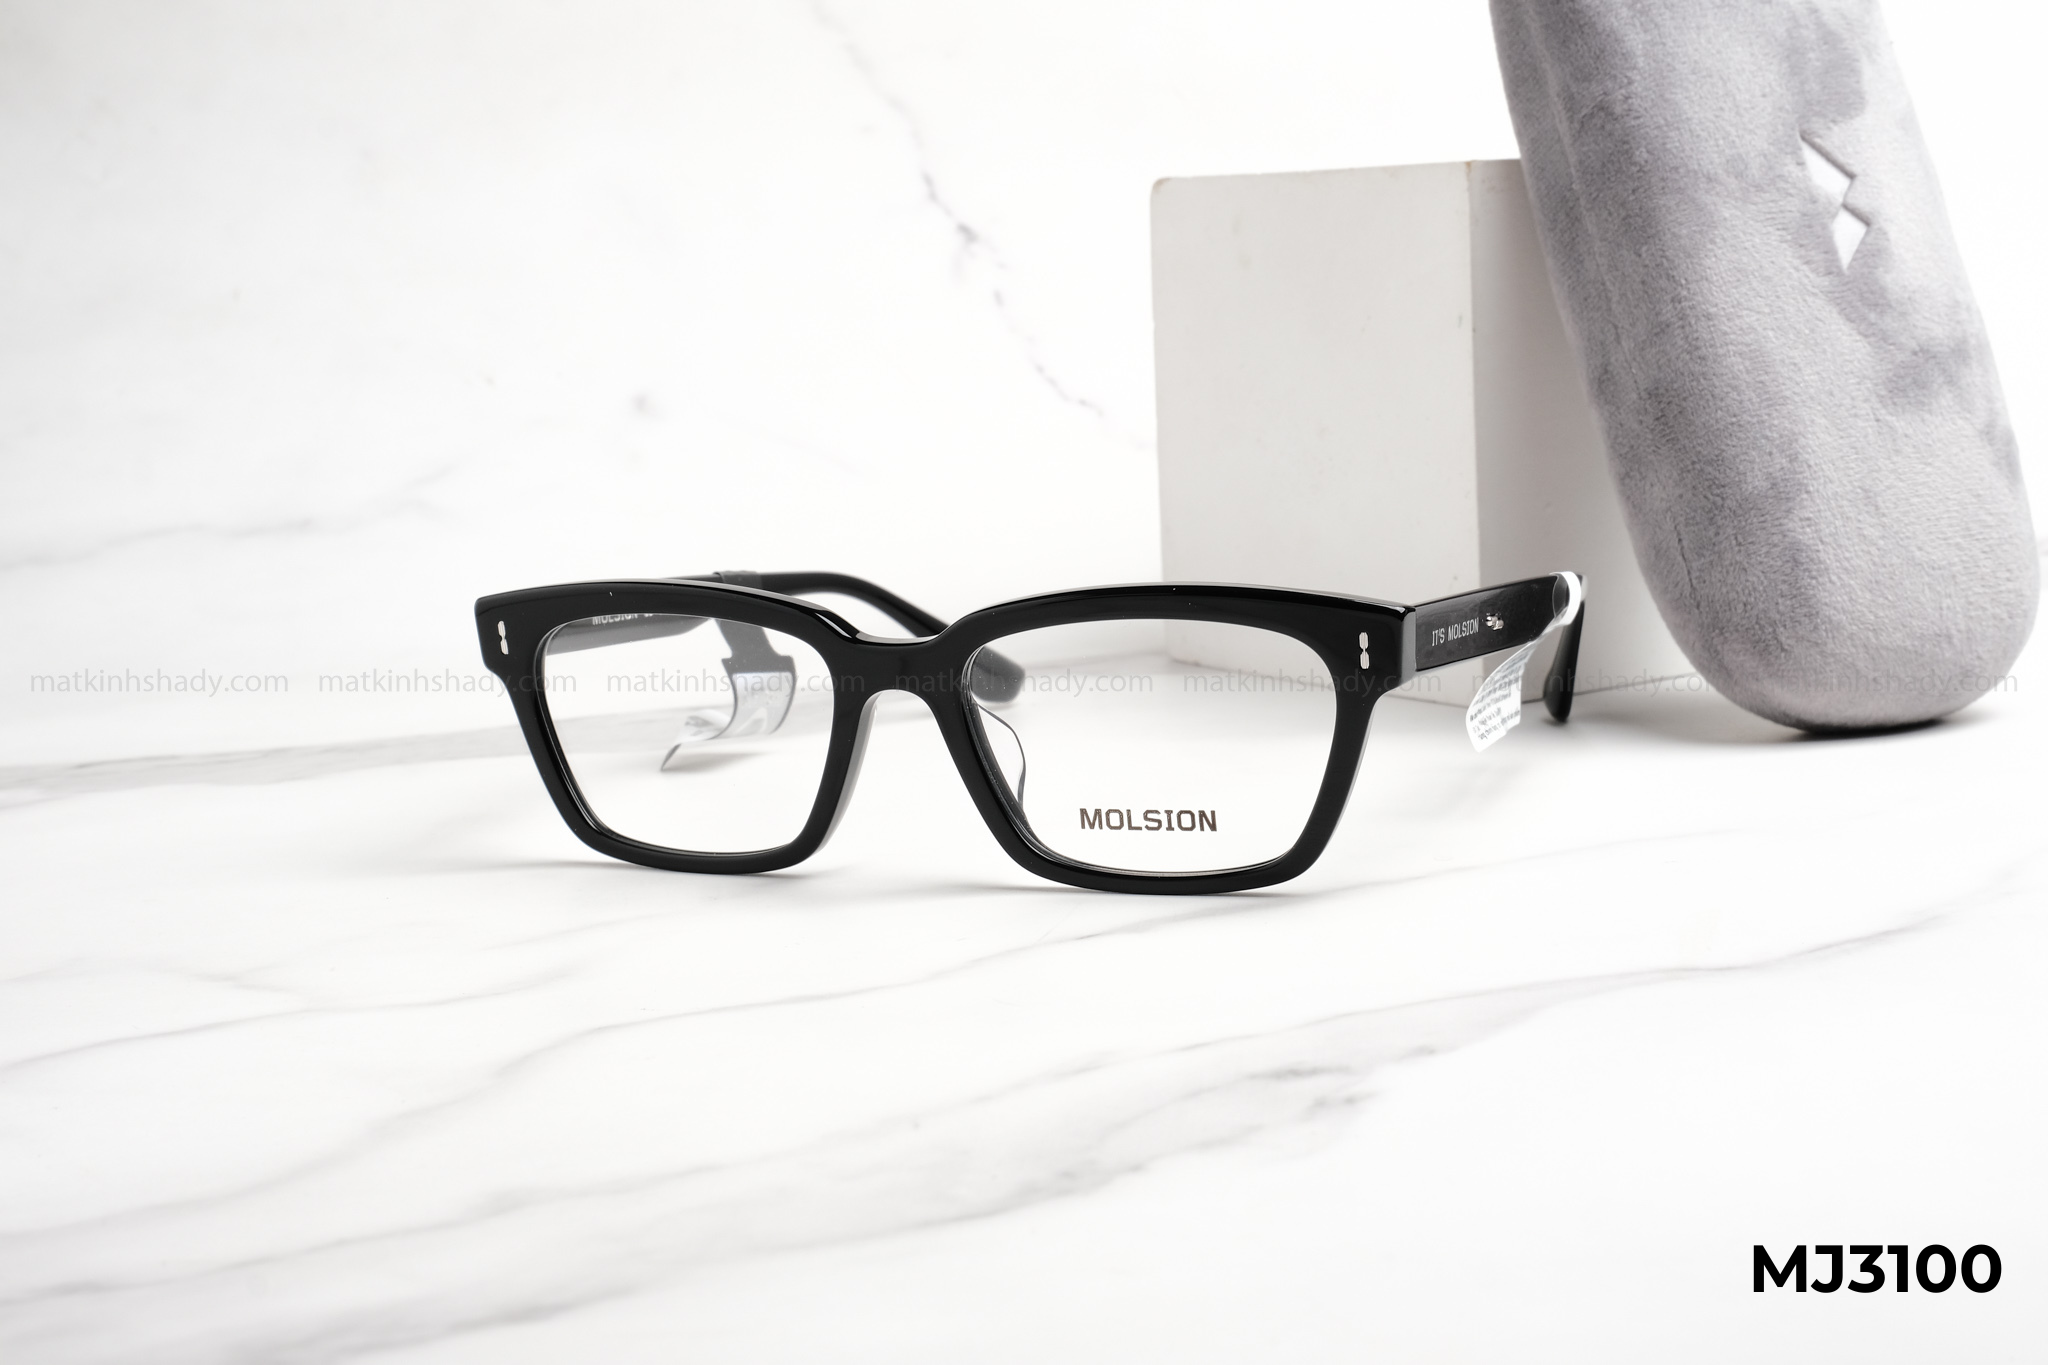  Molsion Eyewear - Glasses - MJ3100 